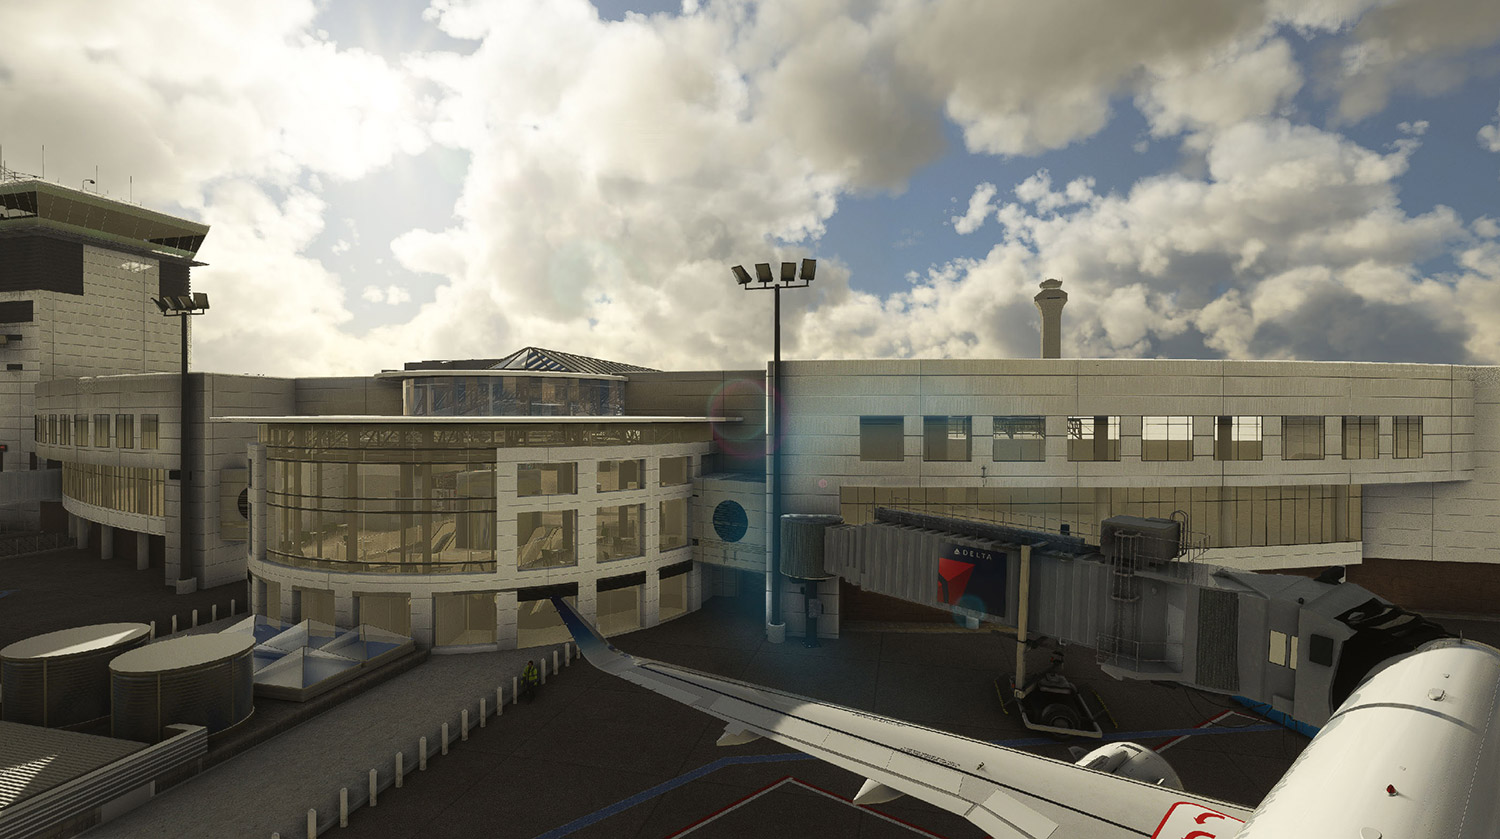 Skyline Simulations - KCVG - Cincinnati International Airport MSFS